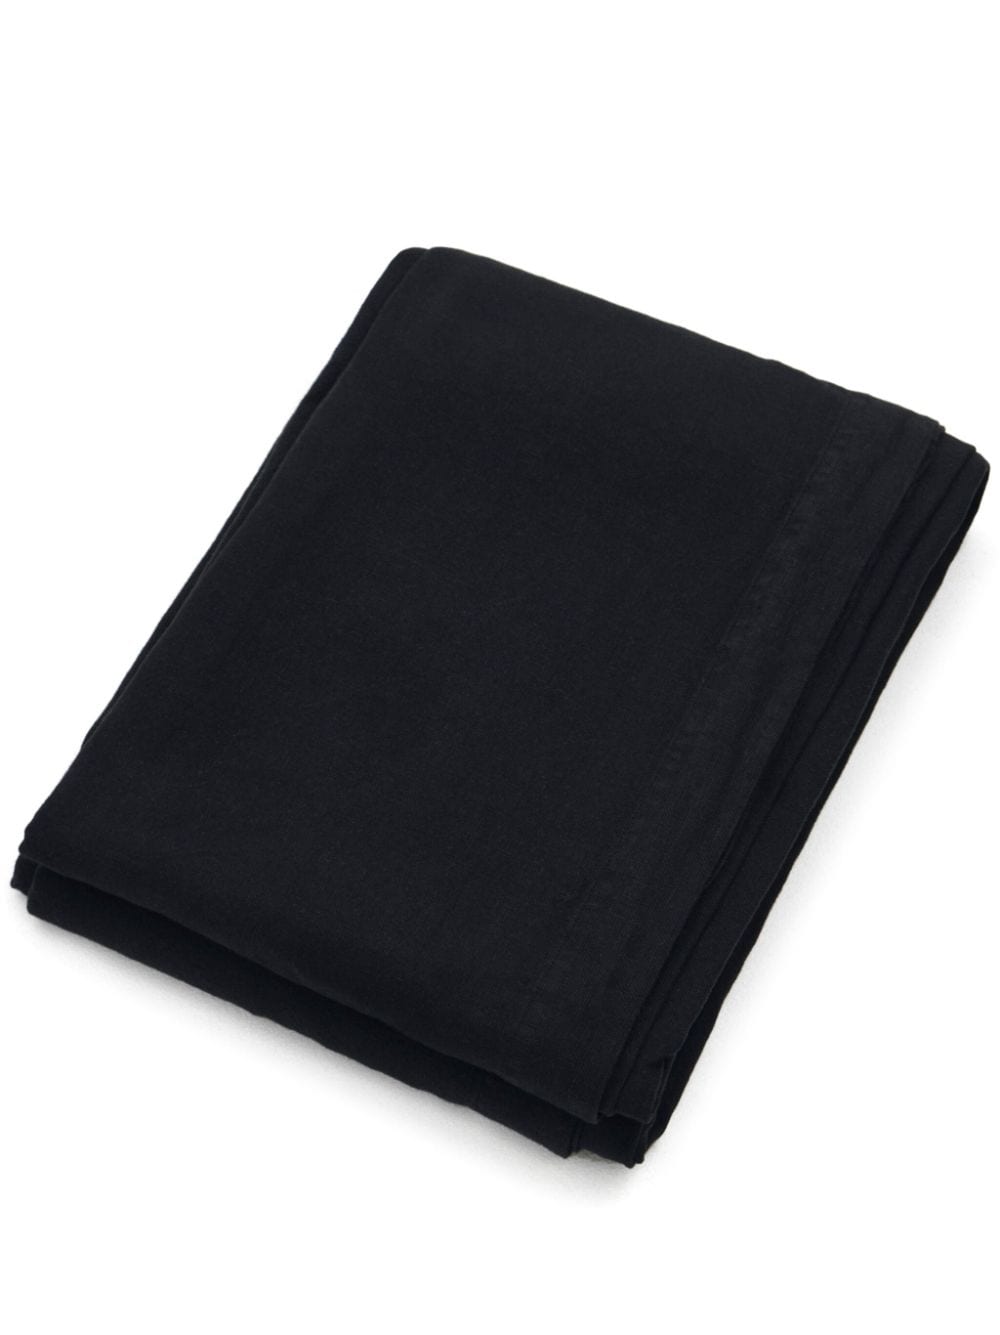 TEKLA stonewashed linen bedspread (240x260cm) - Black